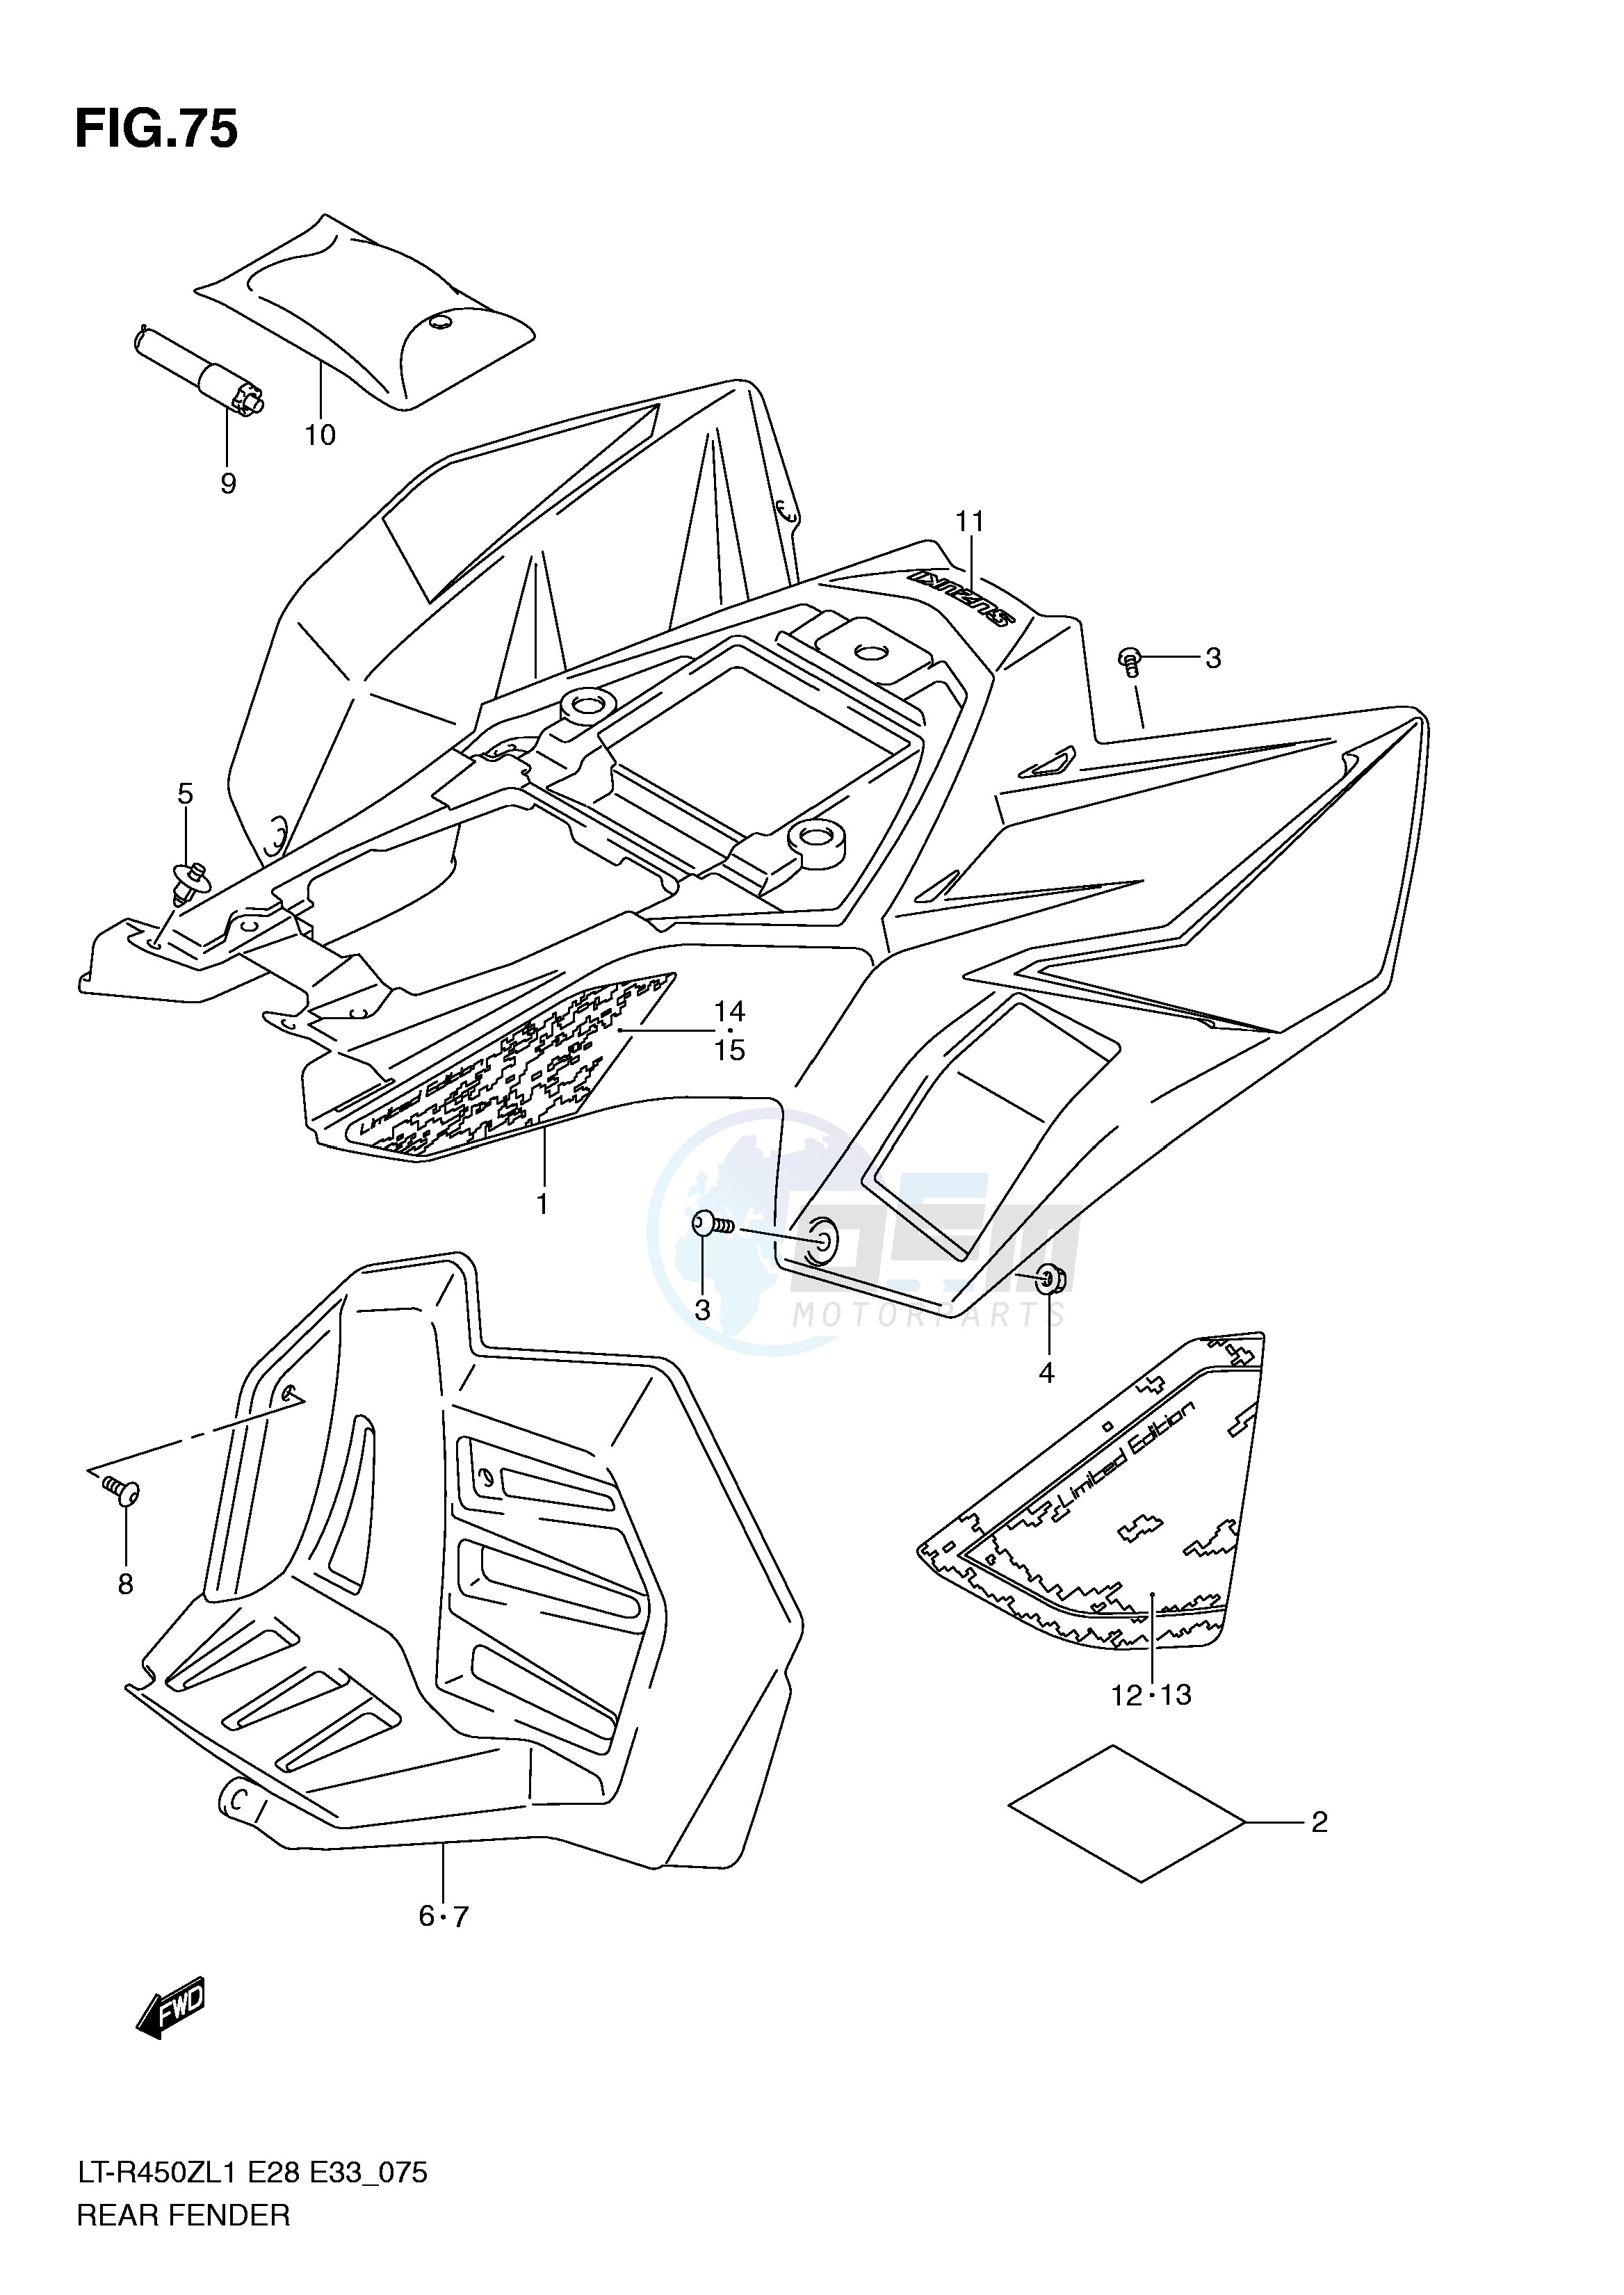 REAR FENDER (LT-R450ZL1 E33) blueprint